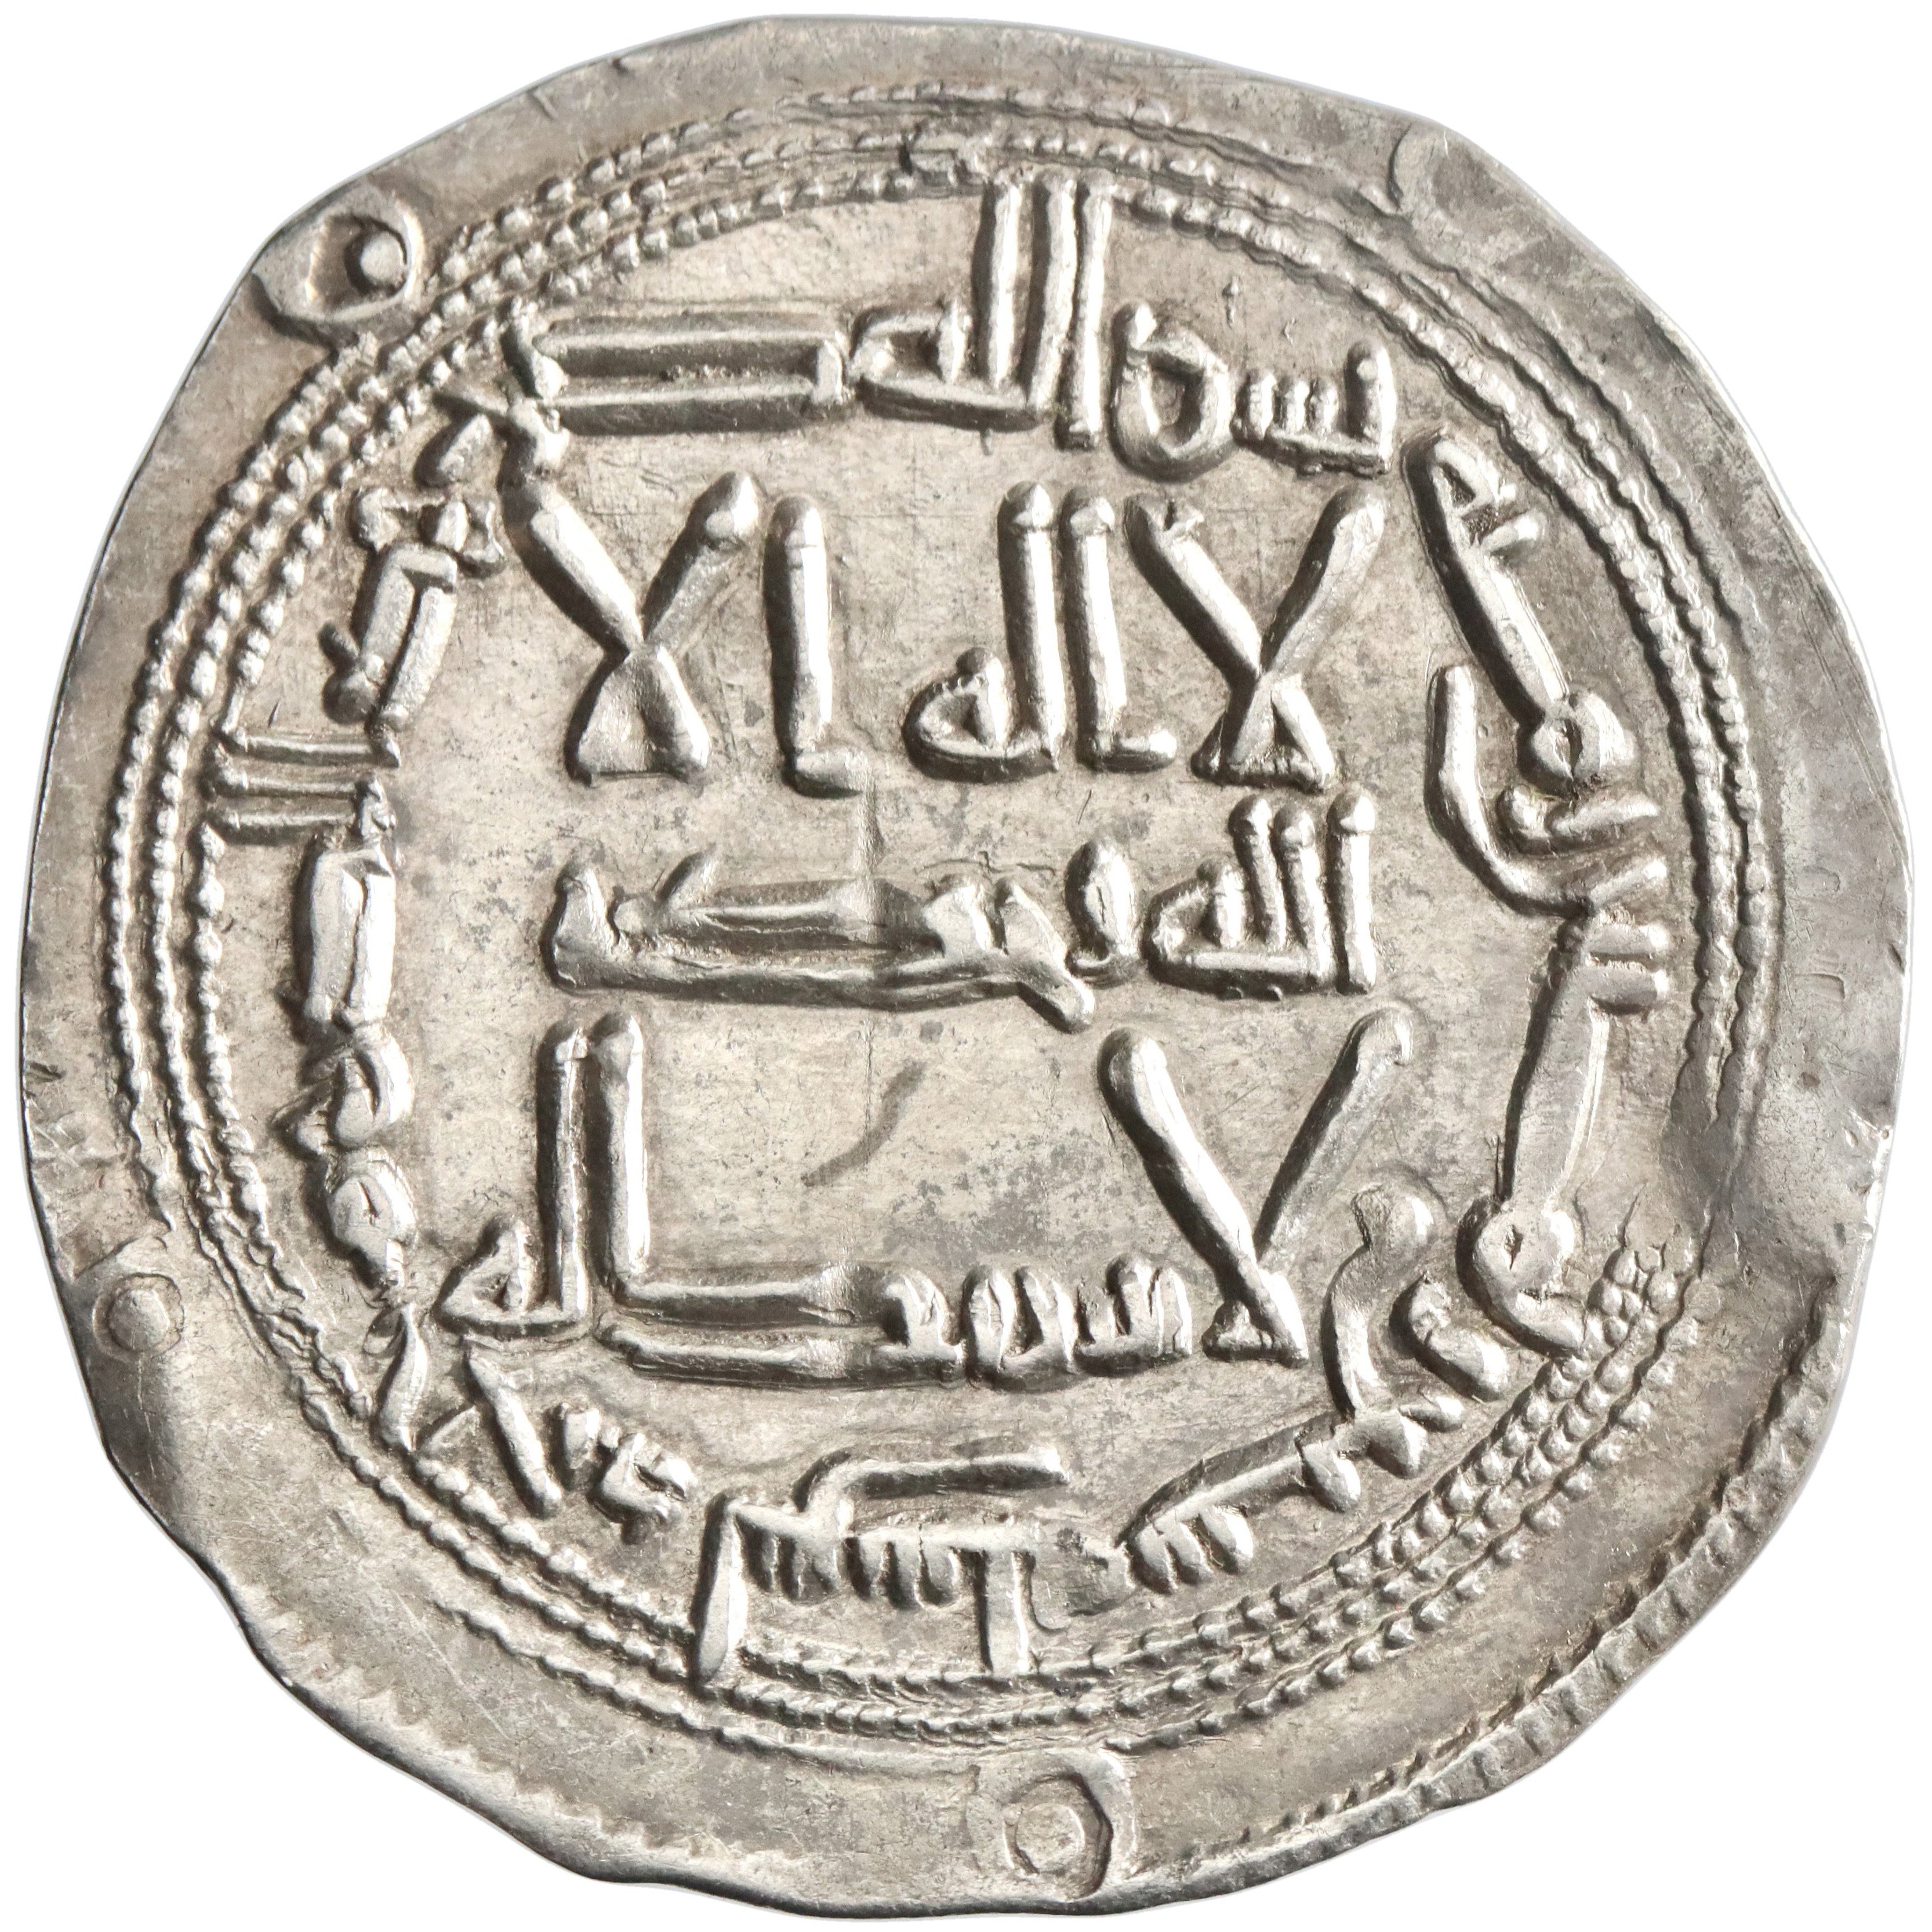 Umayyad of Spain, al-Hakam I, silver dirham, al-Andalus (Spain) mint, AH 187